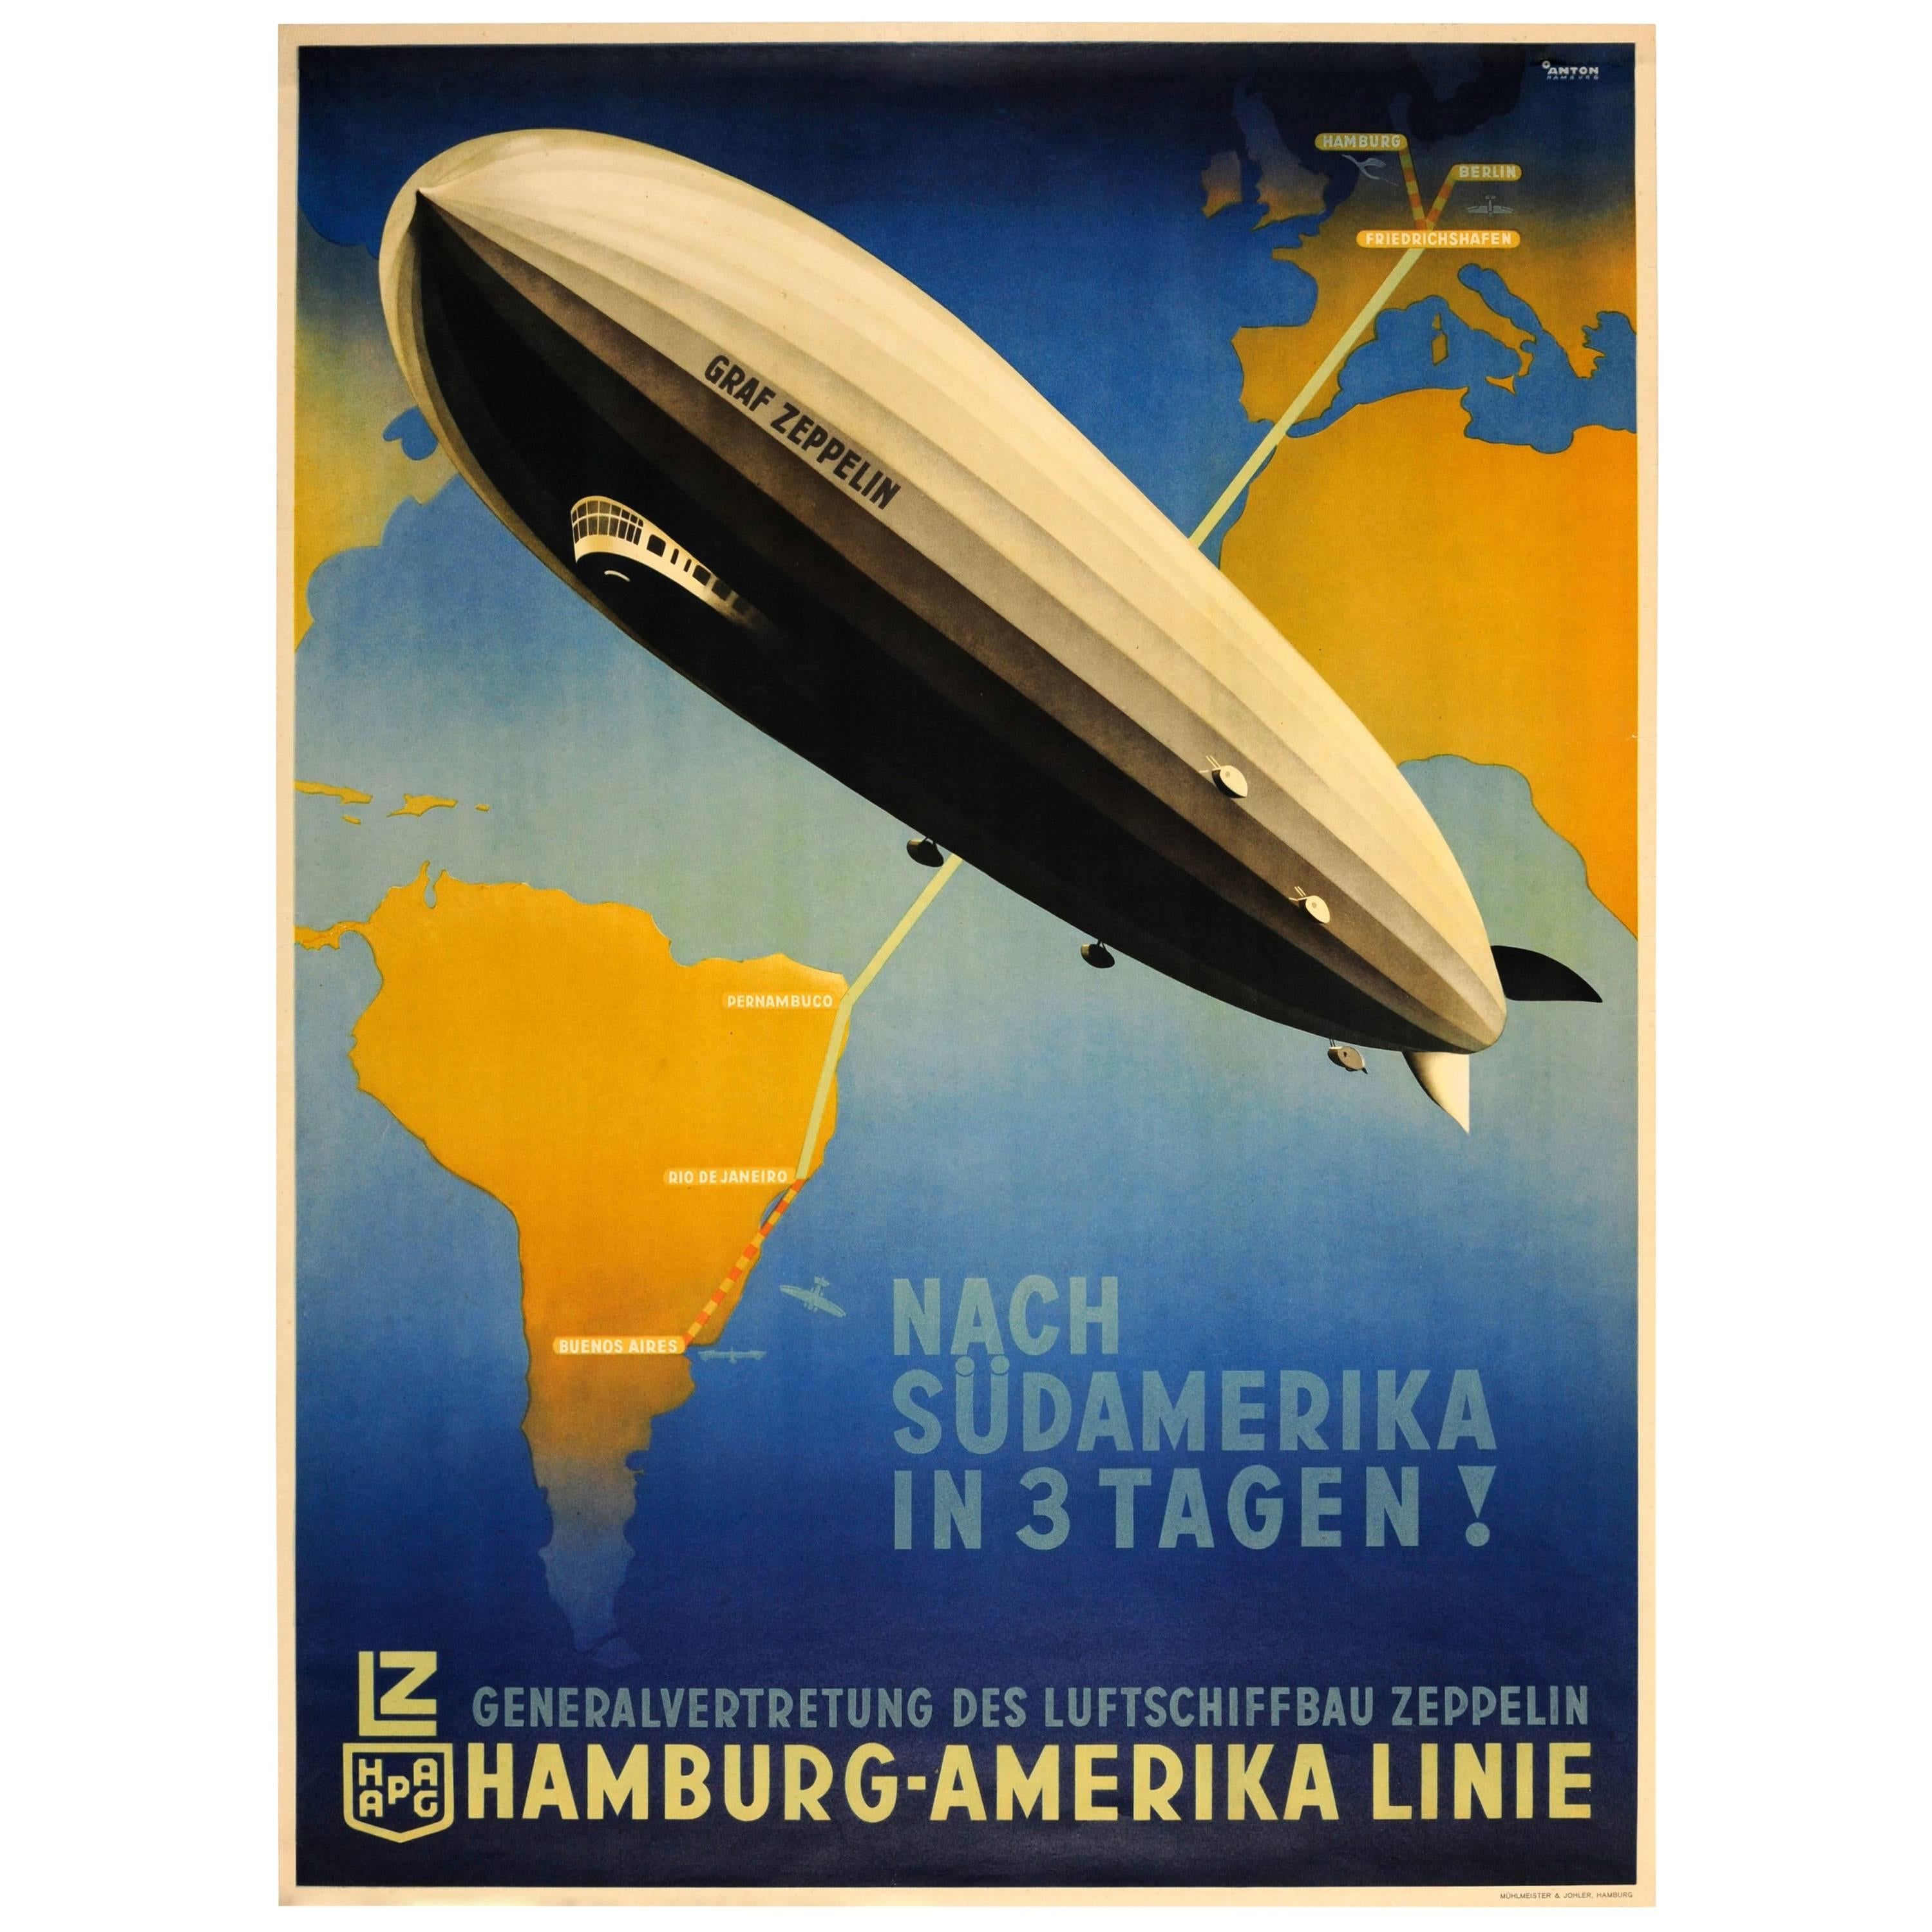 Original Hamburg America Line Poster "Graf Zeppelin to South America in 3 Days!"